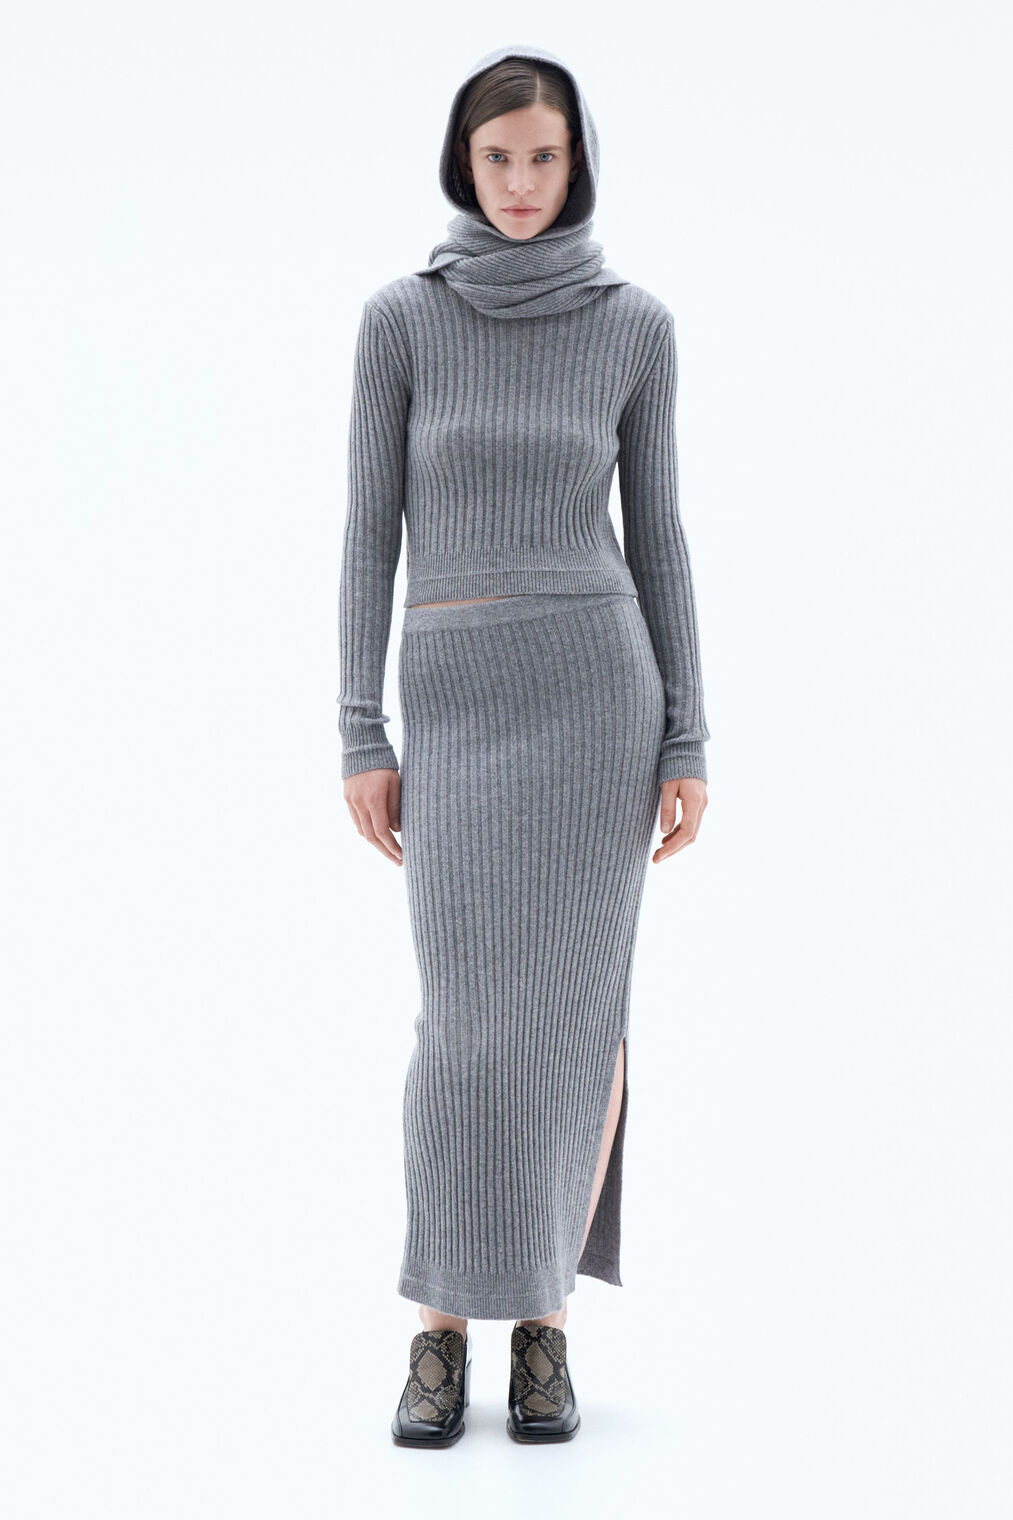 Rib knit skirt in mid grey